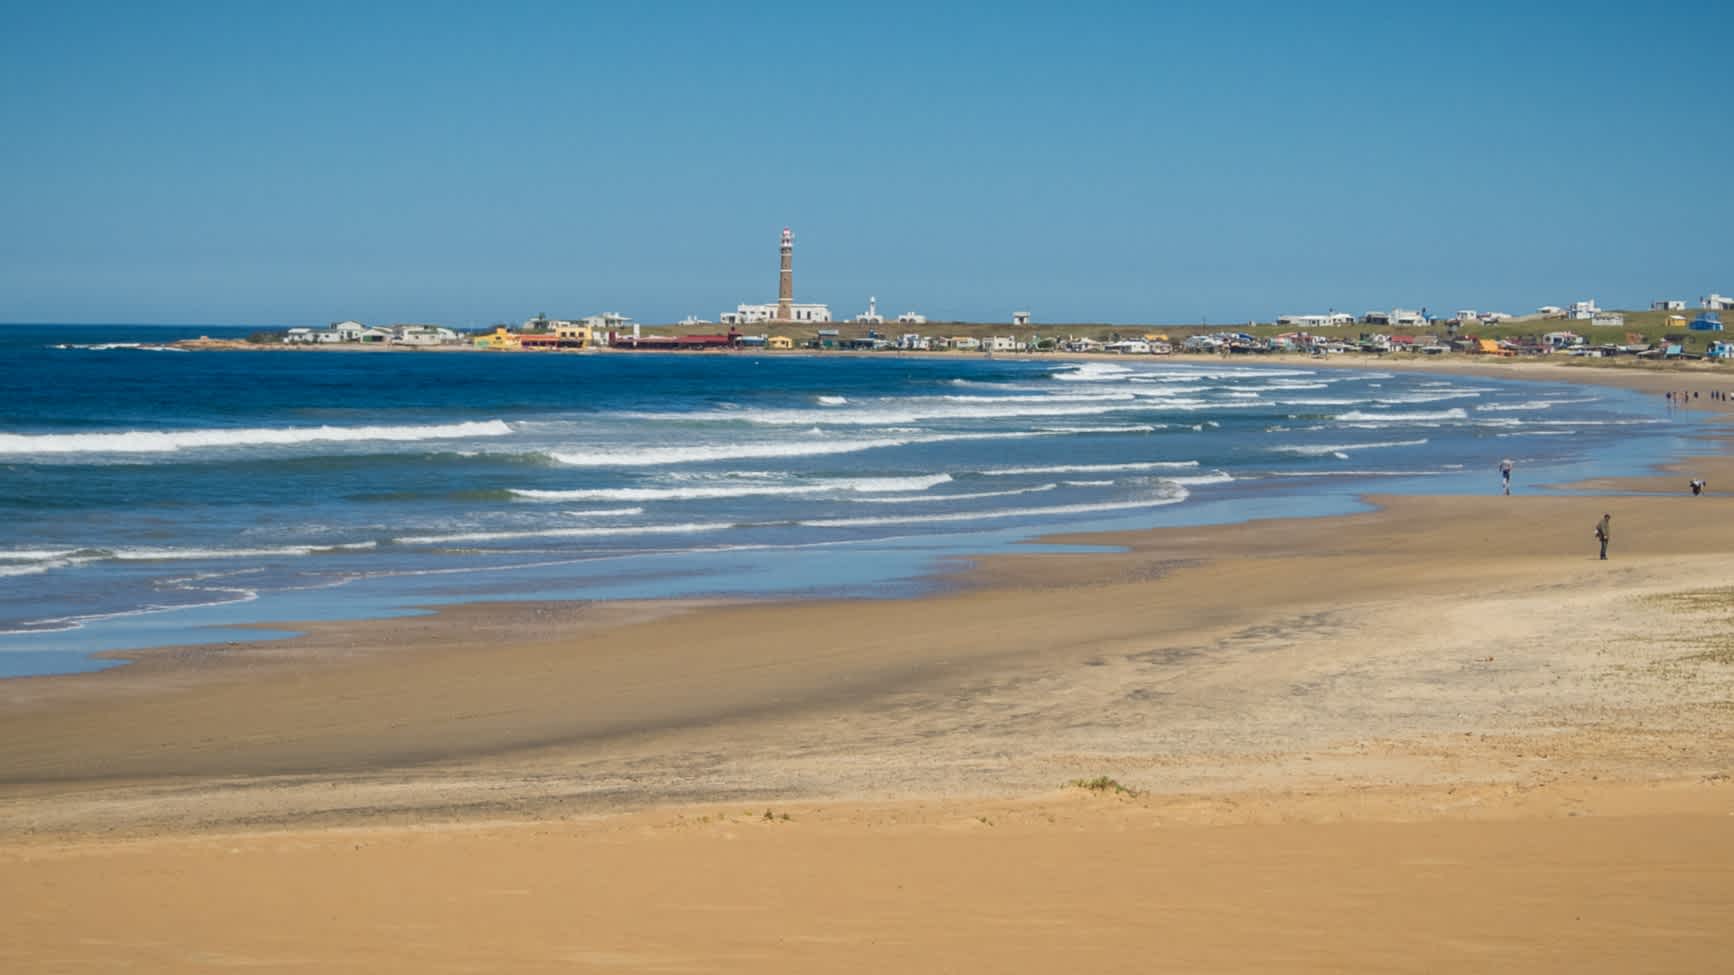 Panoramablick auf den La Calavera Strand in Cabo Polonio, Uruguay

